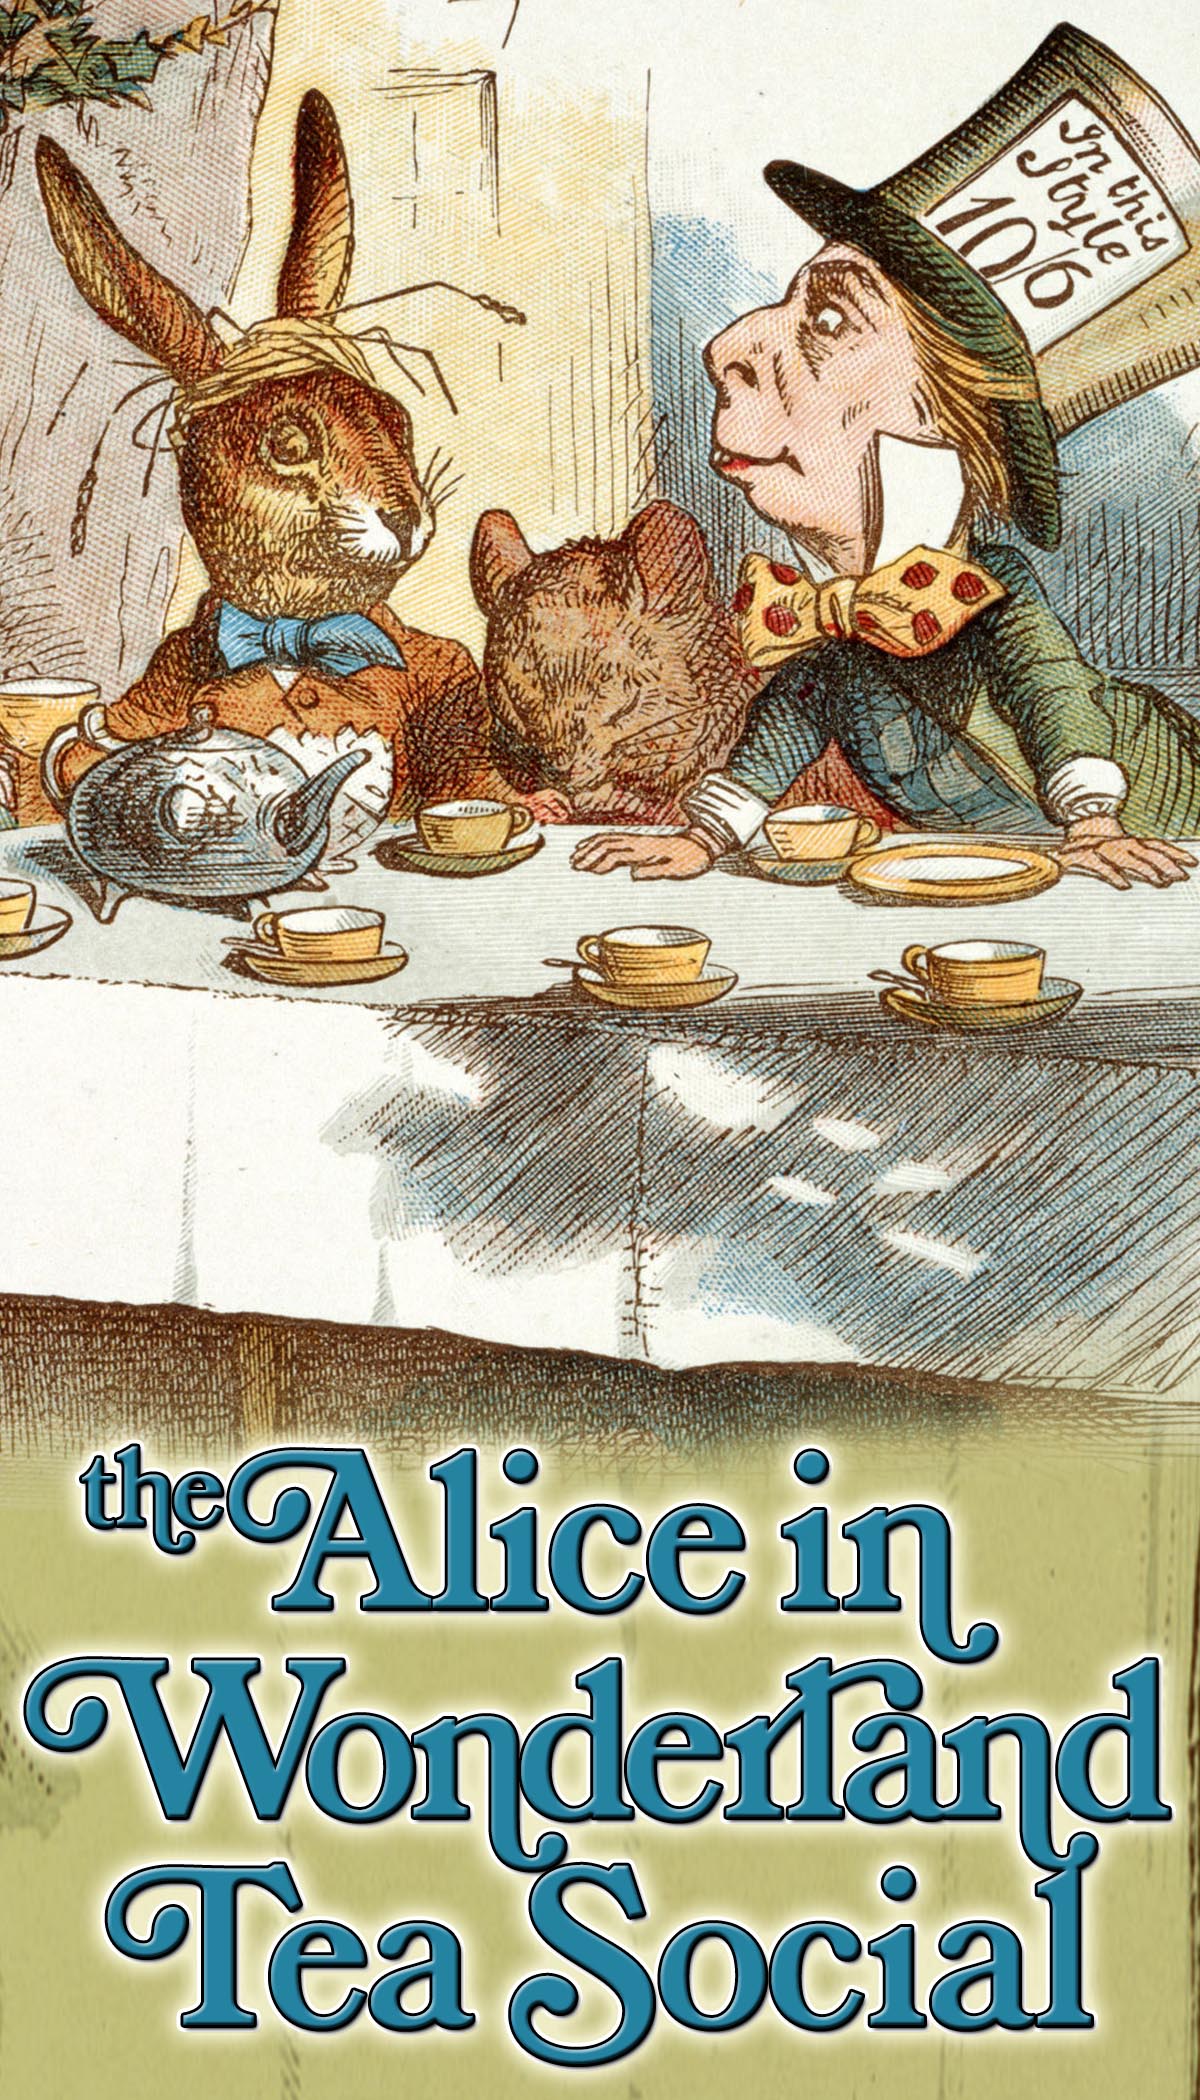 CGW Goes To The Alice in Wonderland Tea Social